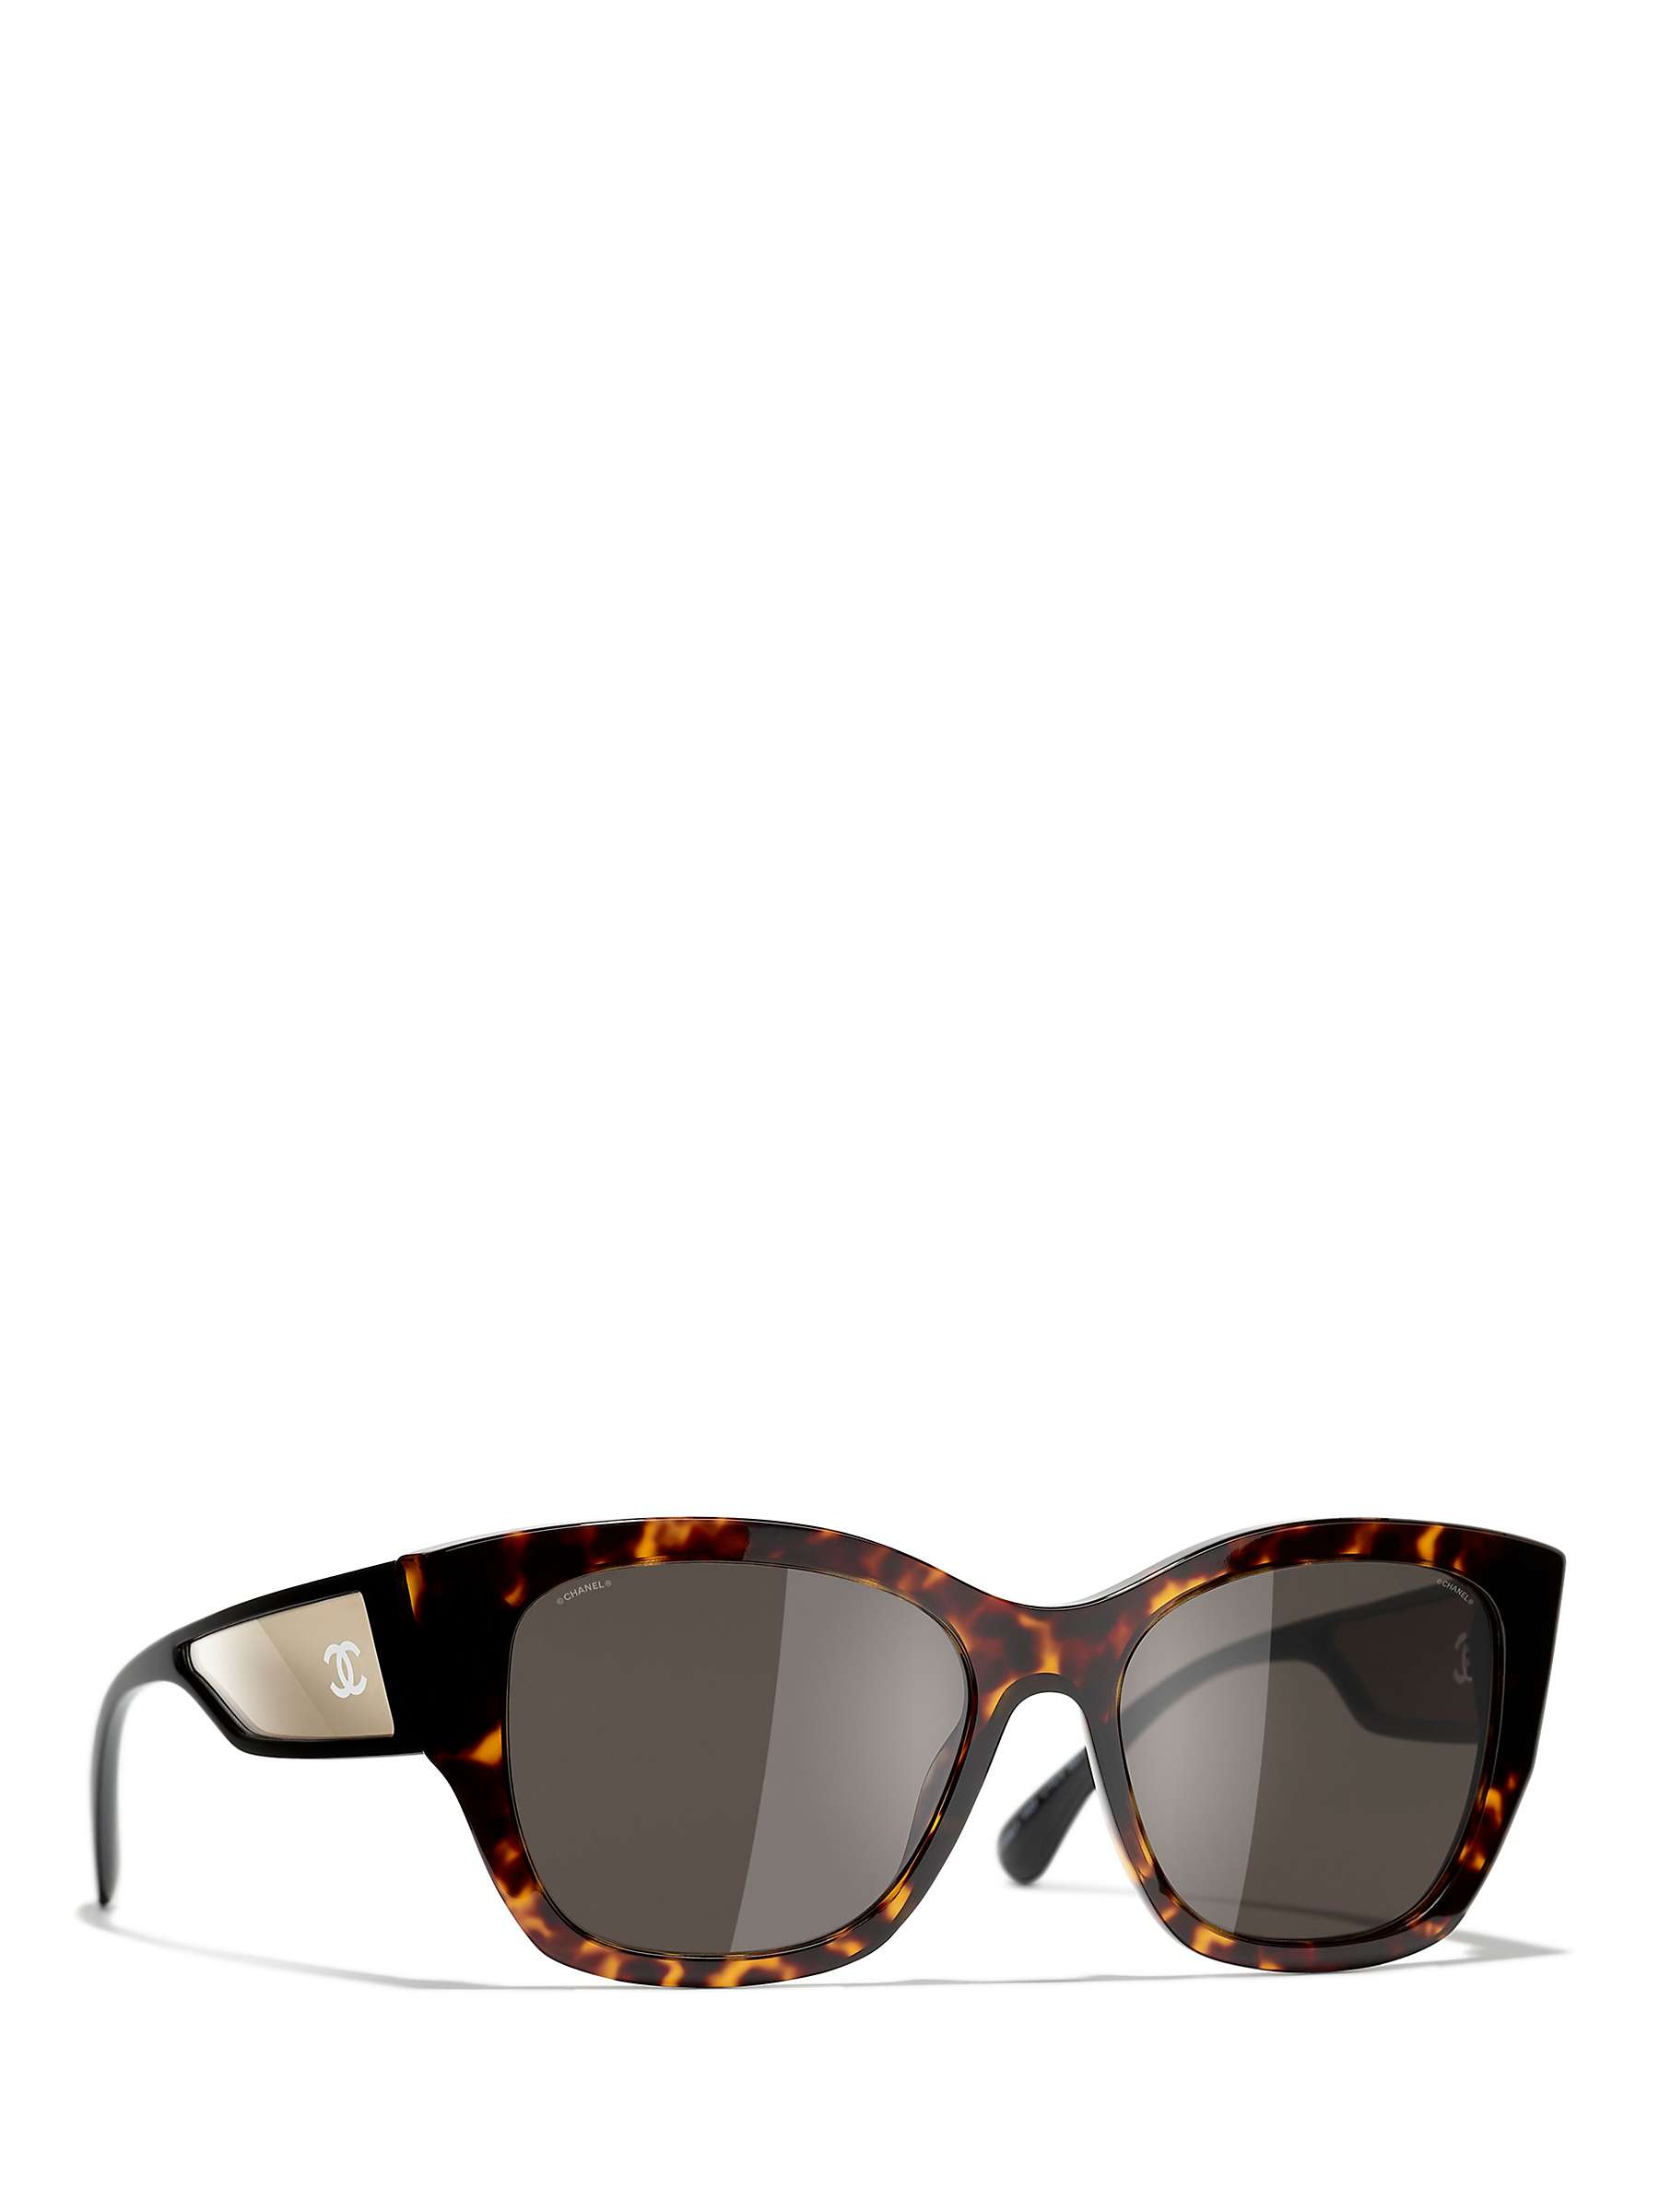 Buy CHANEL Irregular Sunglasses CH5429 Dark Havana/Black Online at johnlewis.com